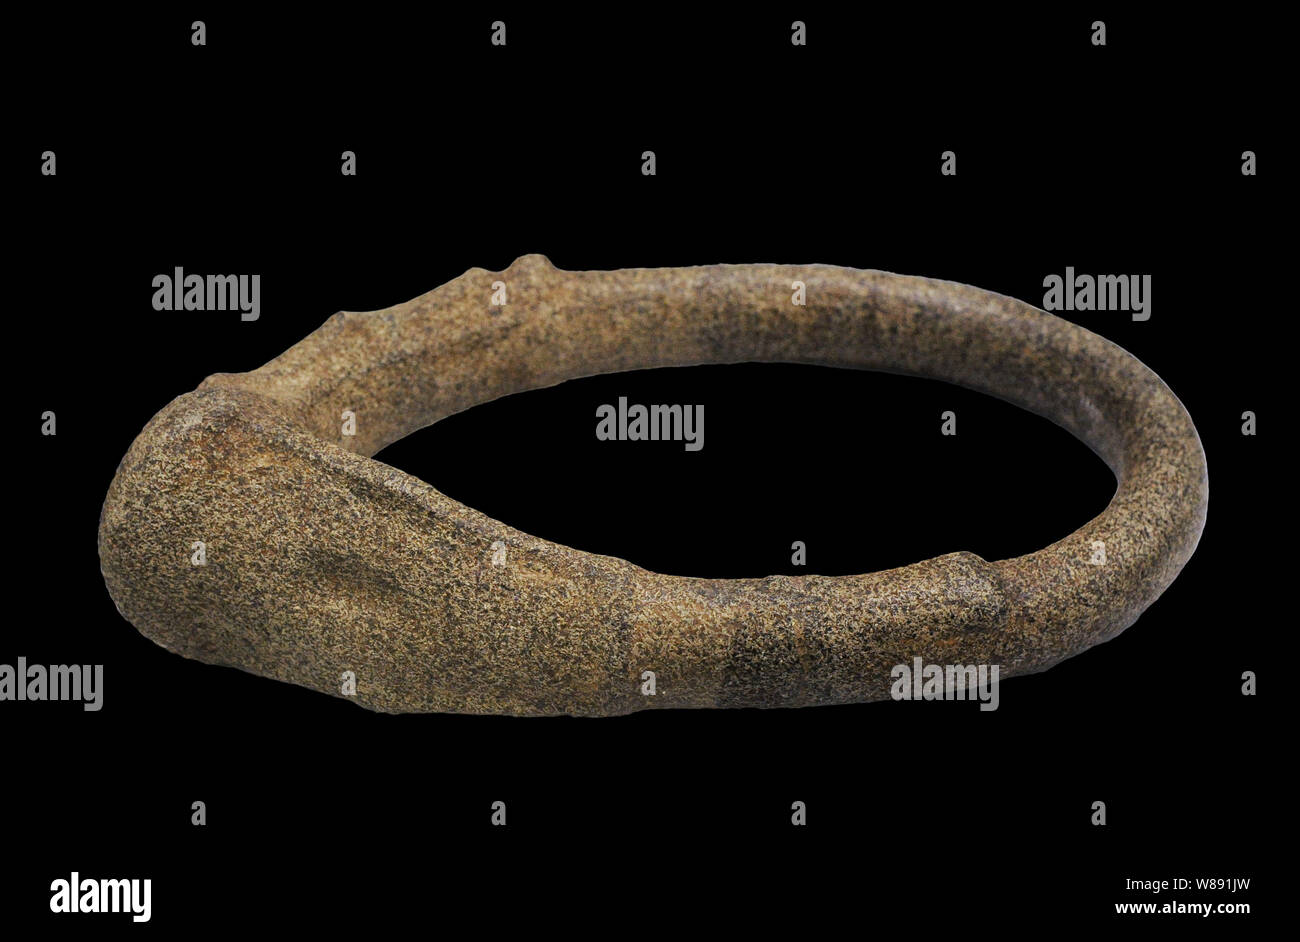 Lithischen Ring. Taino Kultur (1000-1500 AD). Stein. Karibik. Antillen. Präkolumbianischen Ära. Museum des Amerikas. Madrid, Spanien. Stockfoto